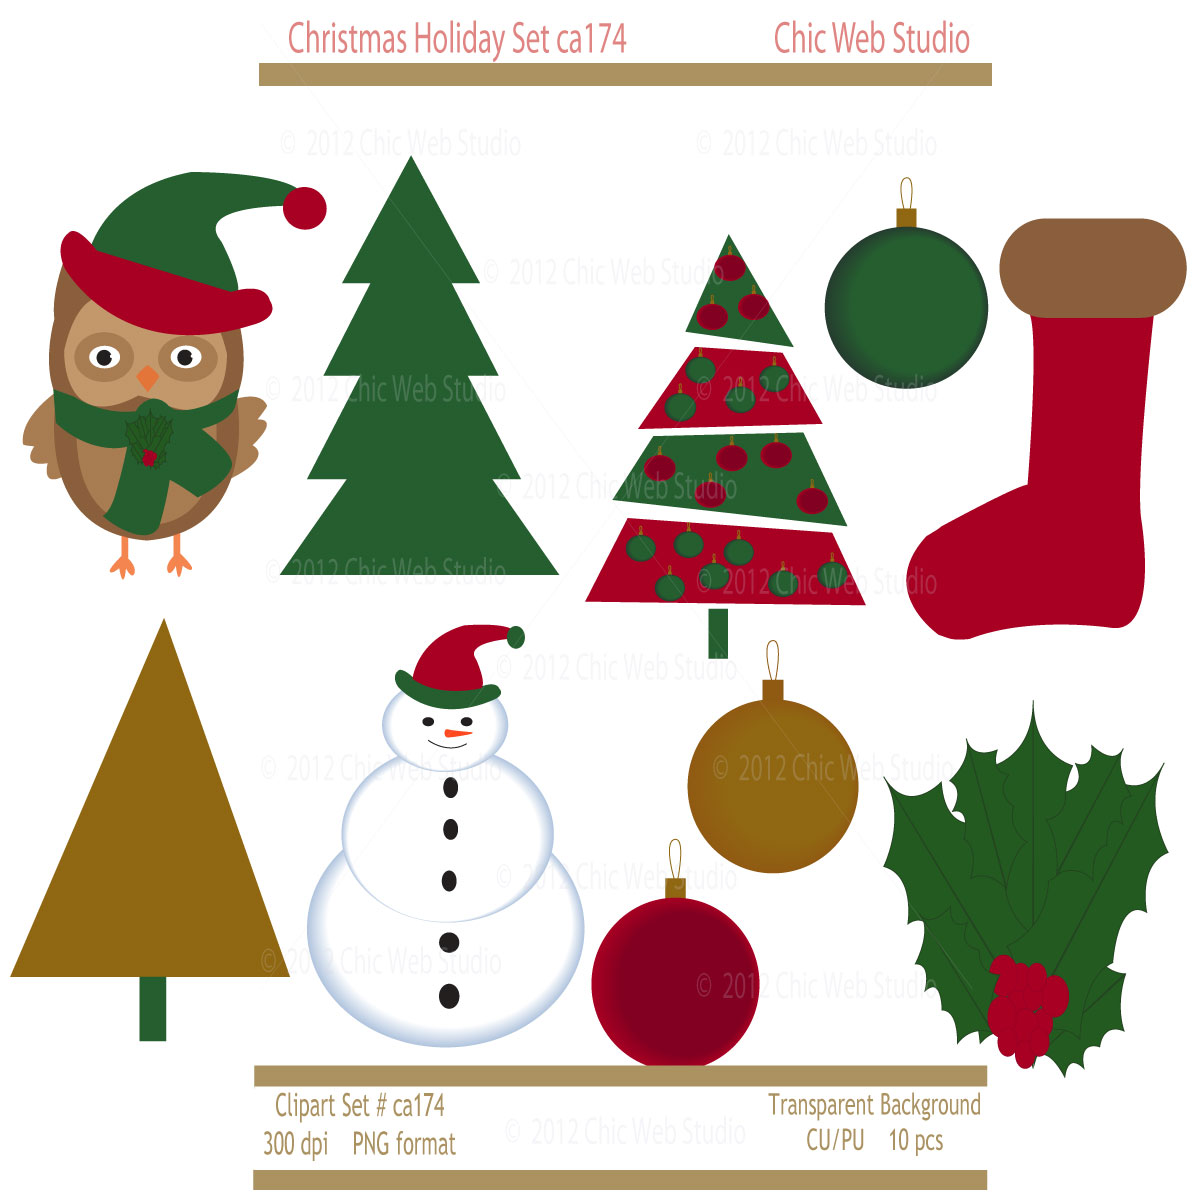 Chic Web Studio  Christmas Holiday Clipart